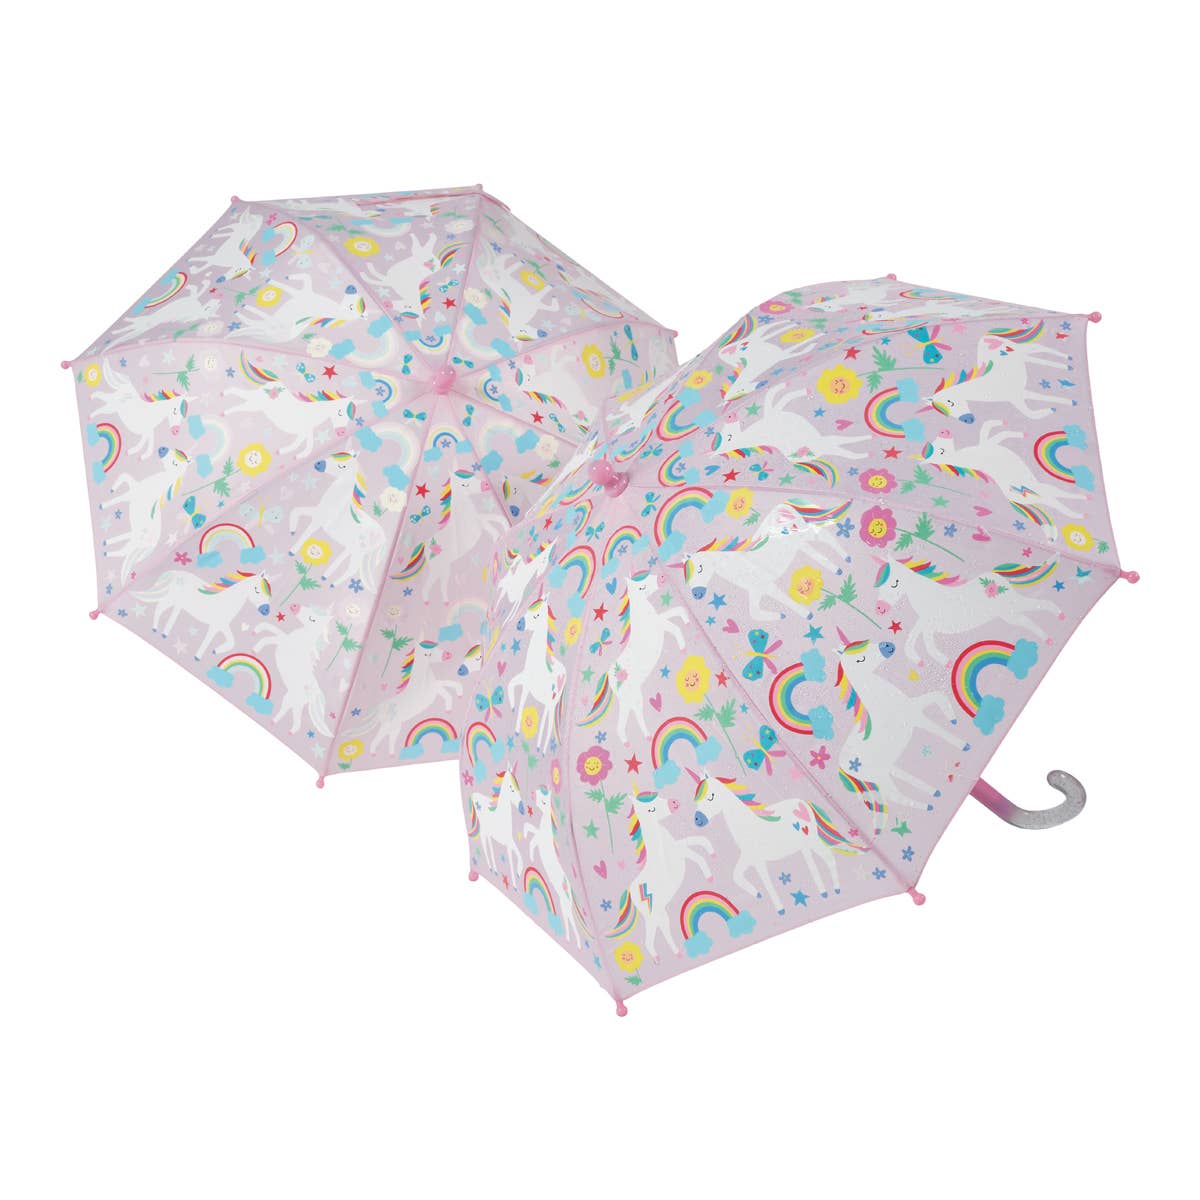 Rainbow Unicorn Umbrella